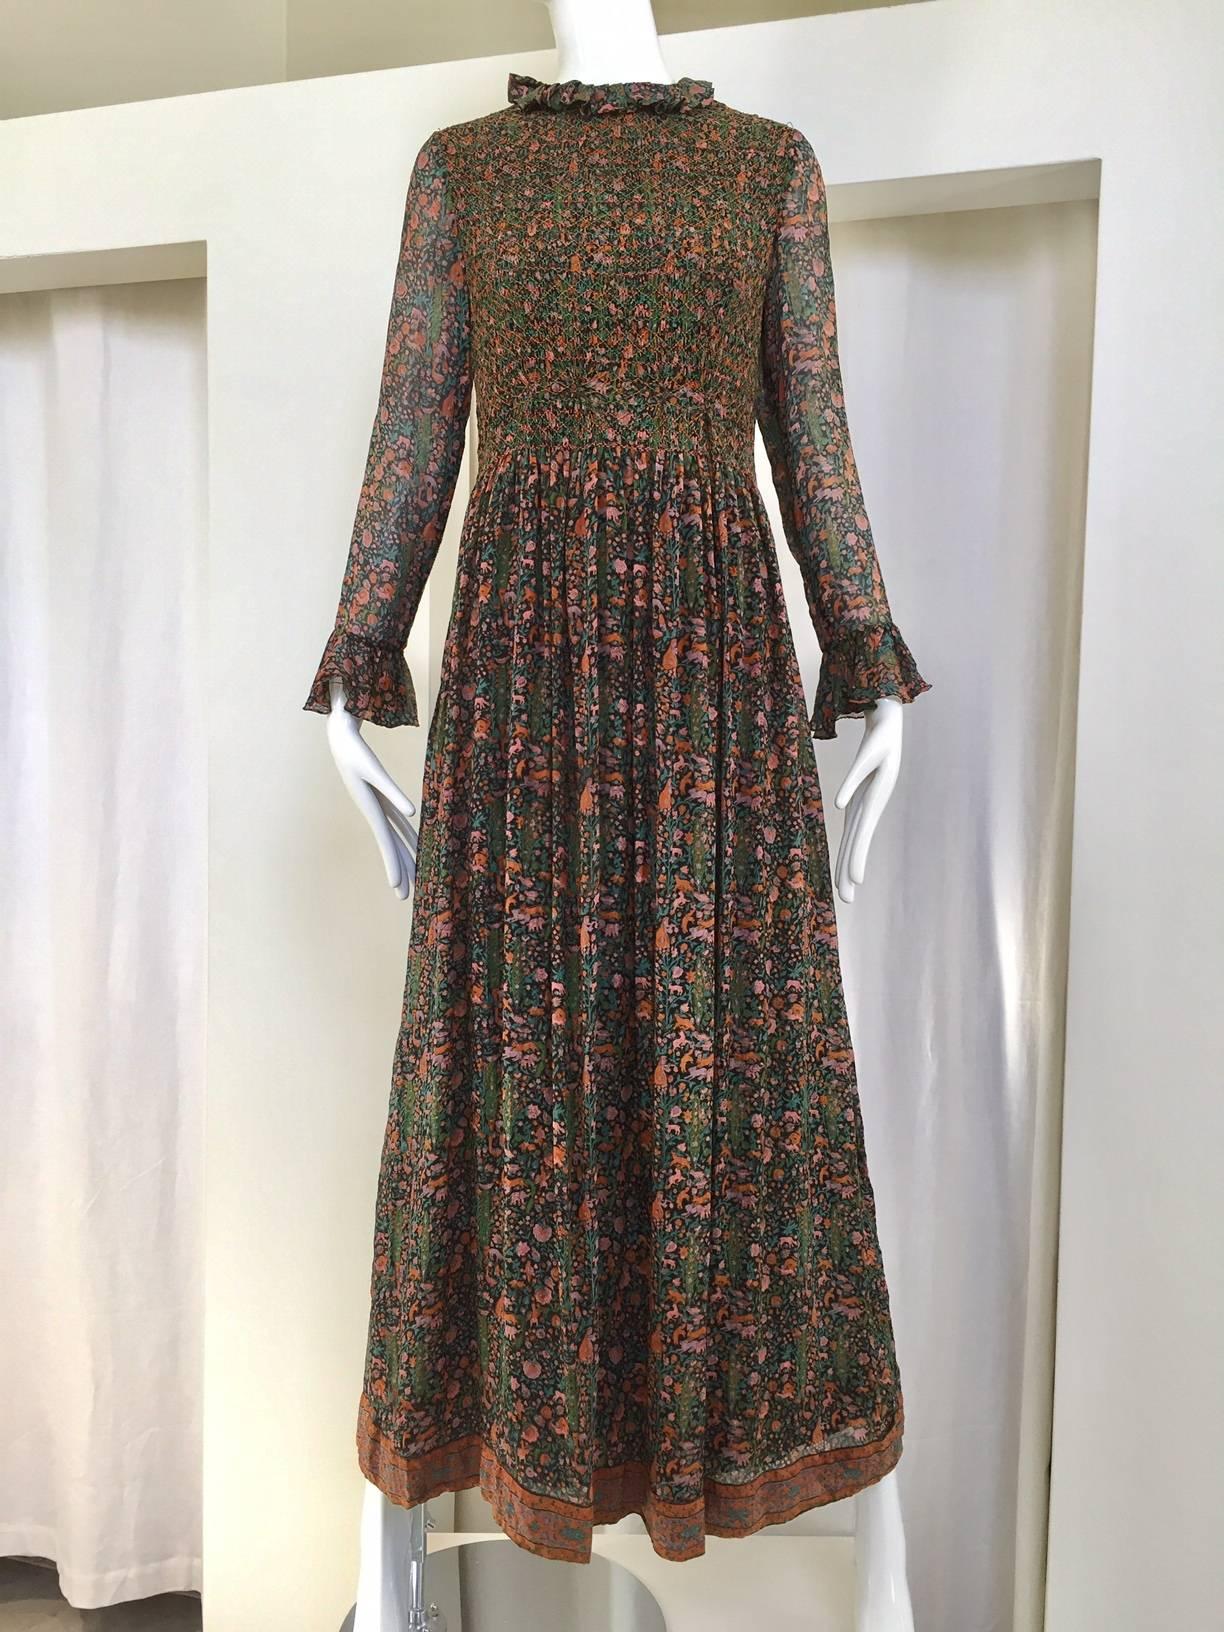 70s Treacy Lowe floral silk maxi dress.
Size: 4